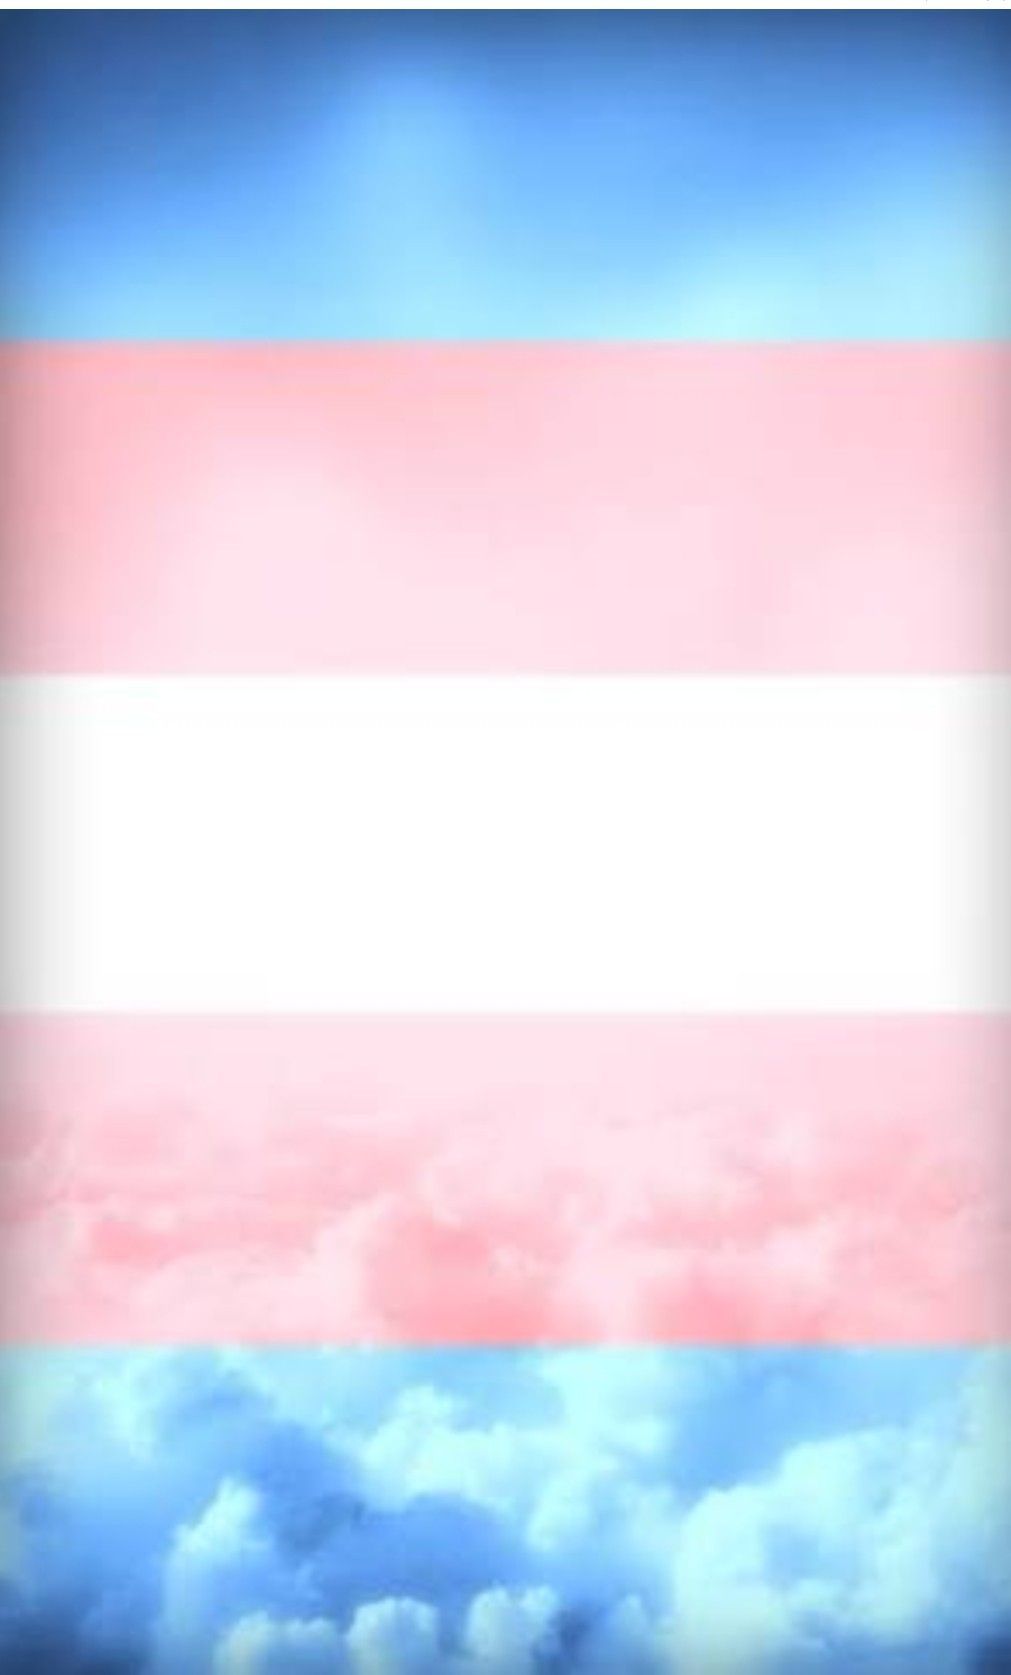 Trans Flag art. Trans flag, Rainbow wallpaper iphone, Flag art